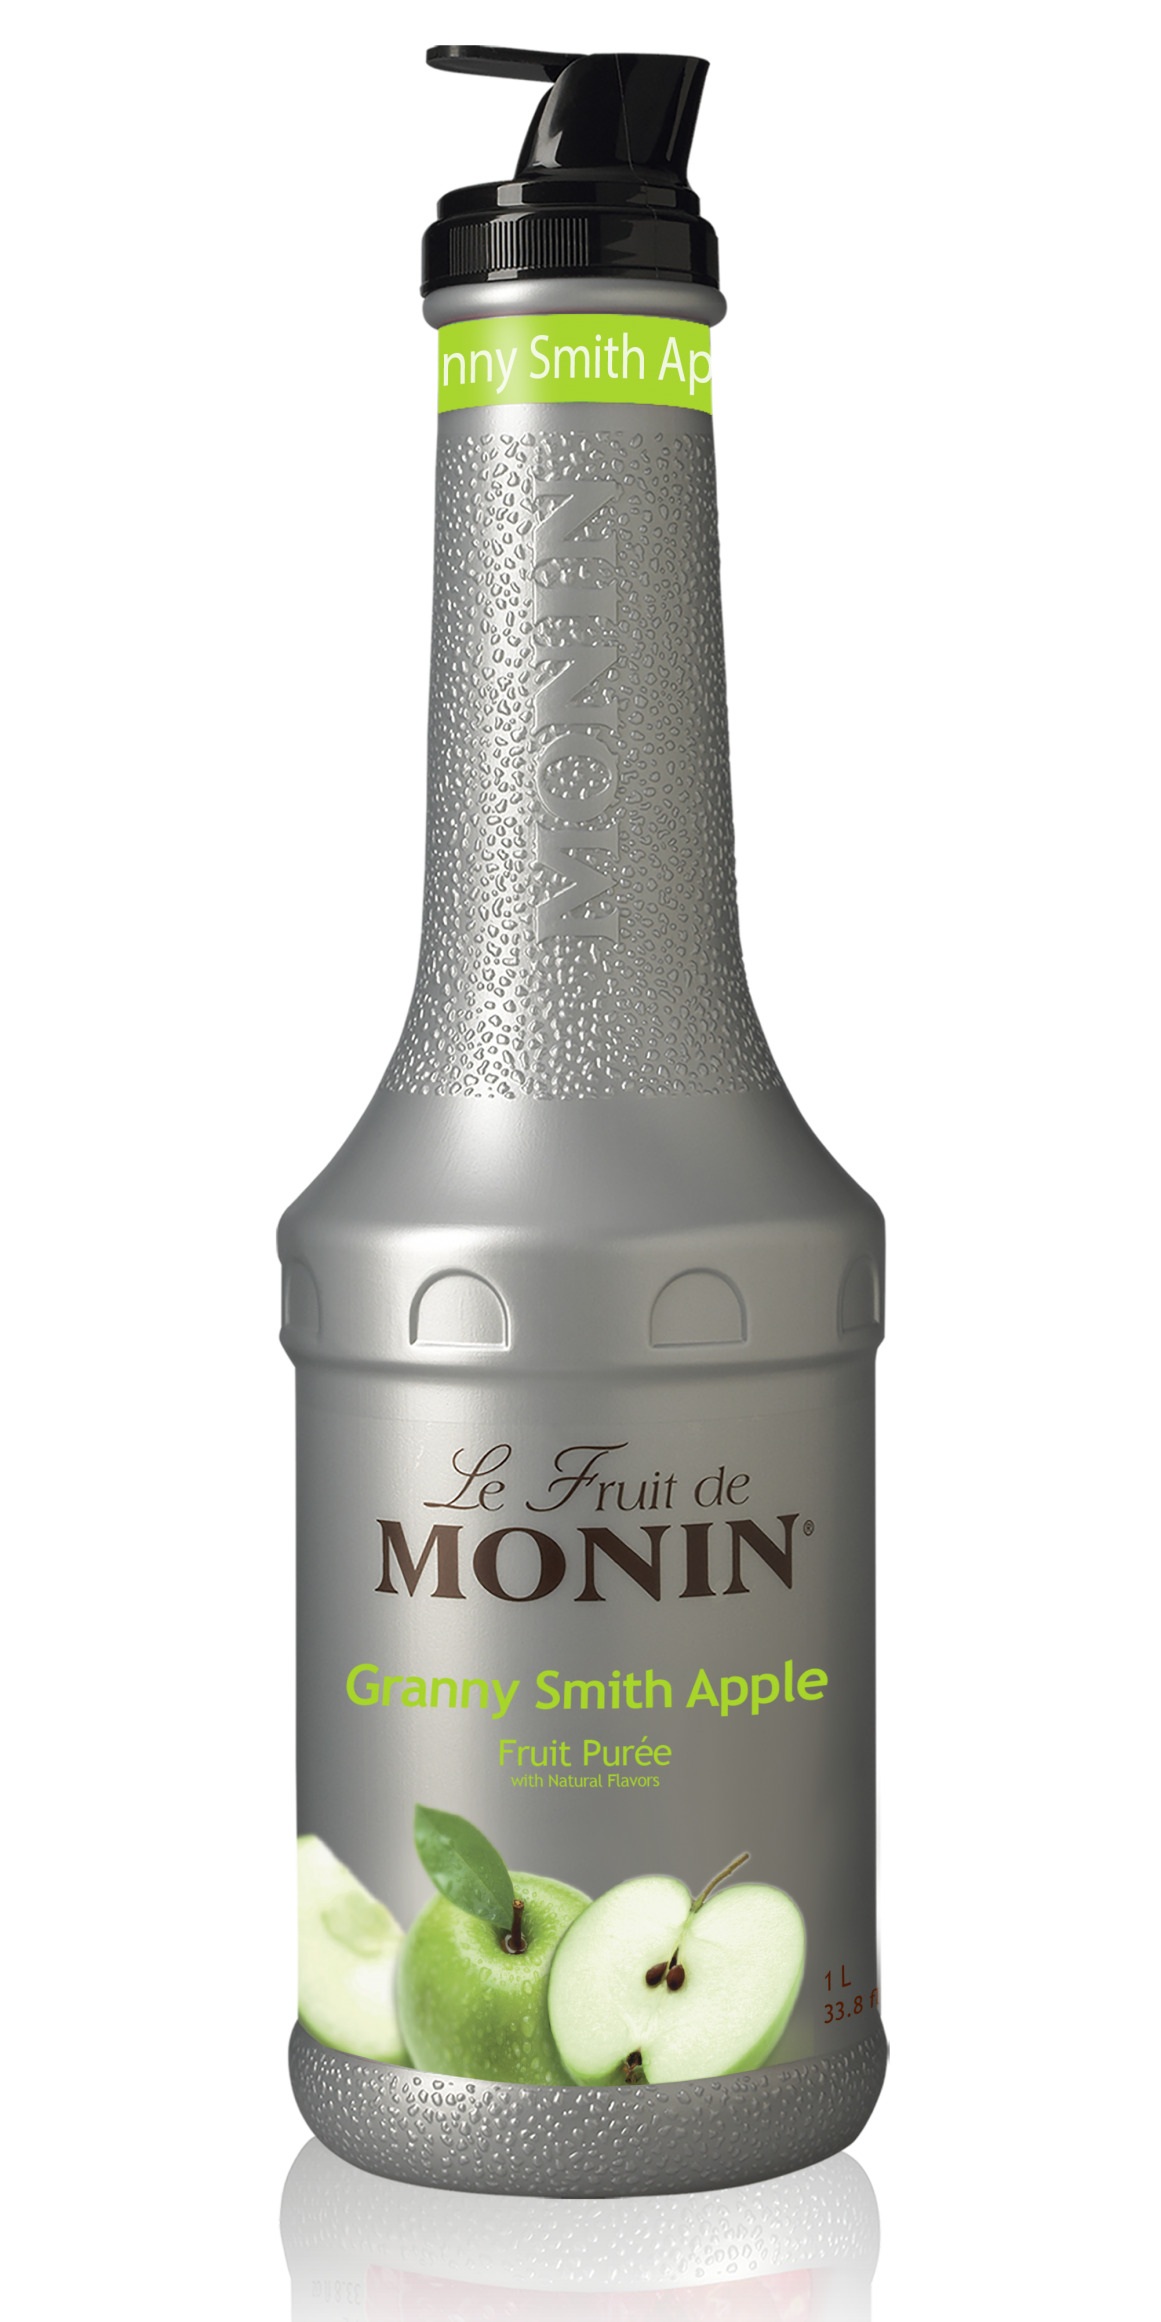 Granny Smith Apple Fruit Purée - Monin